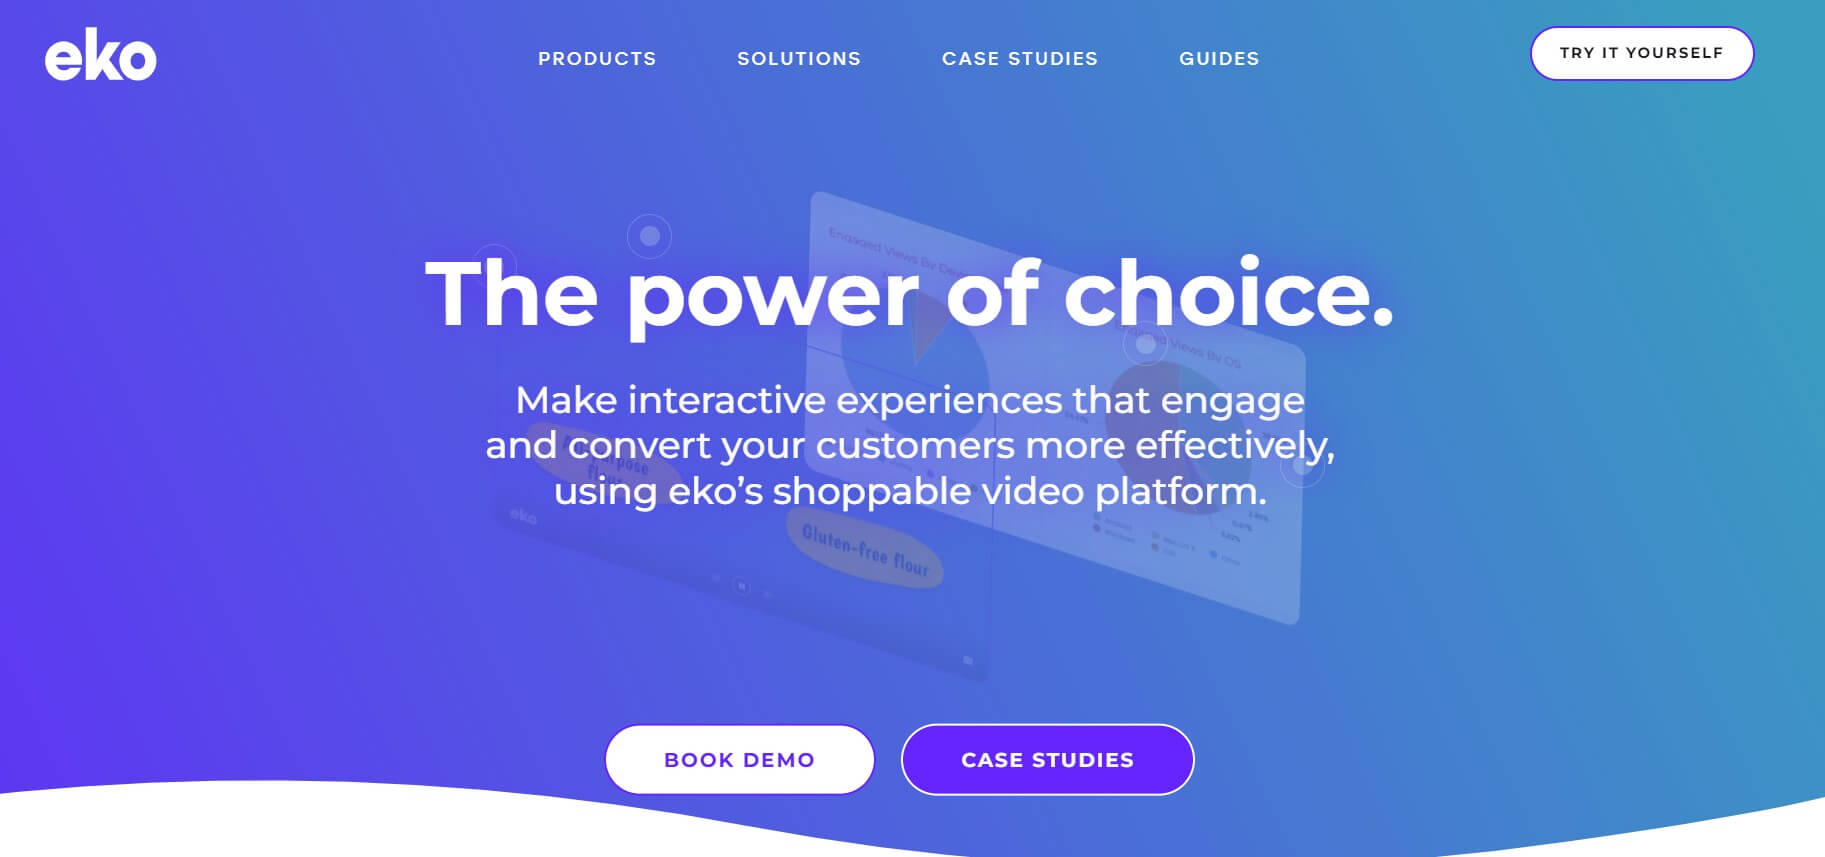 Eko is an interactive video platform